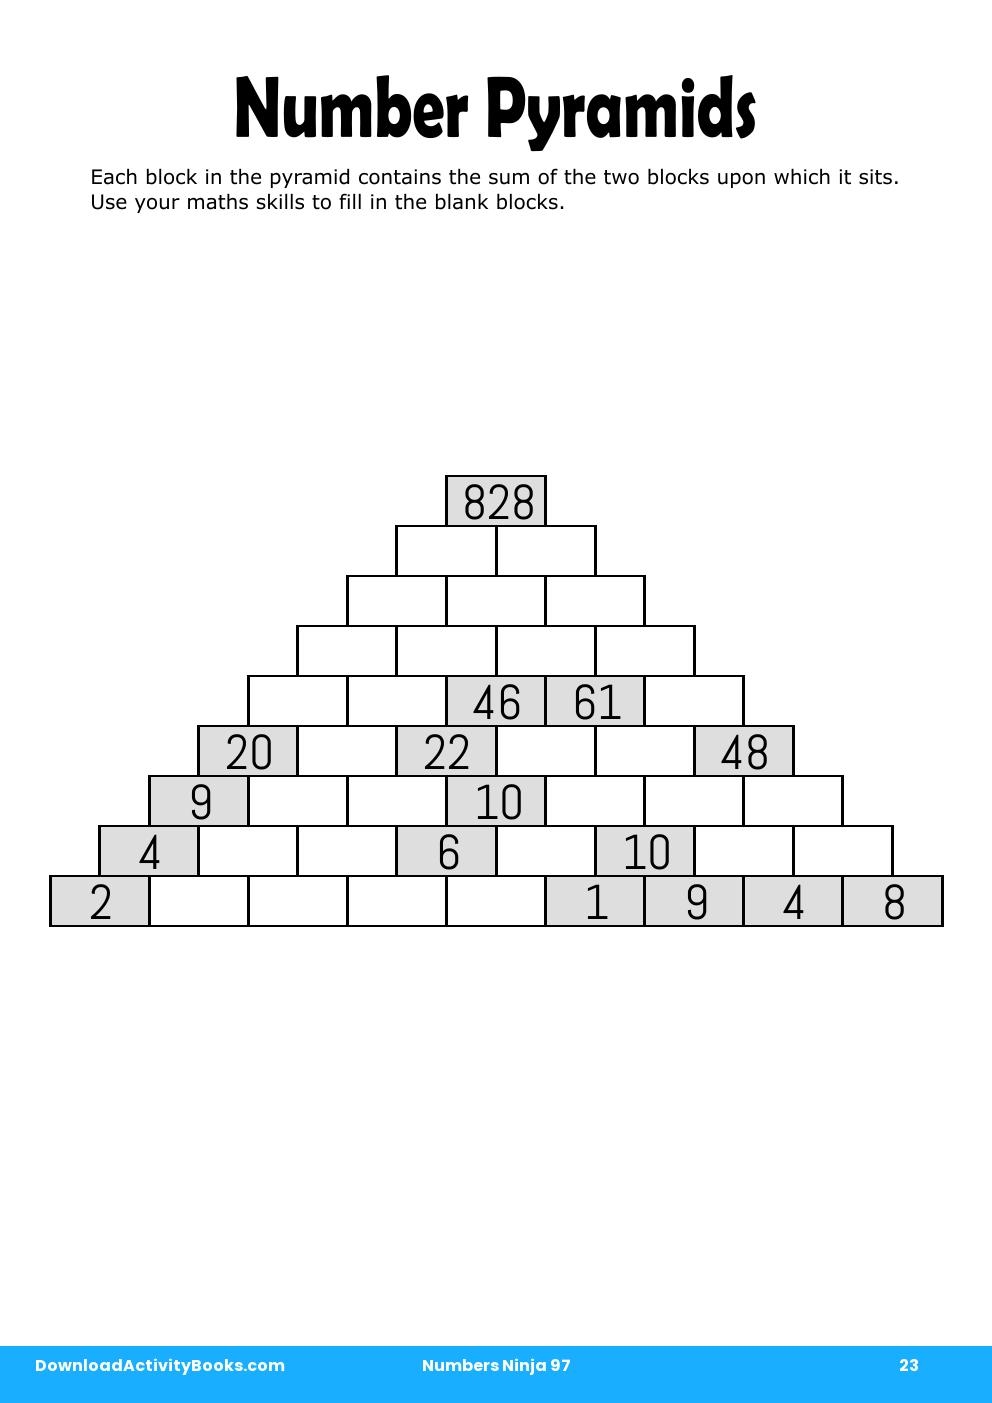 Number Pyramids in Numbers Ninja 97